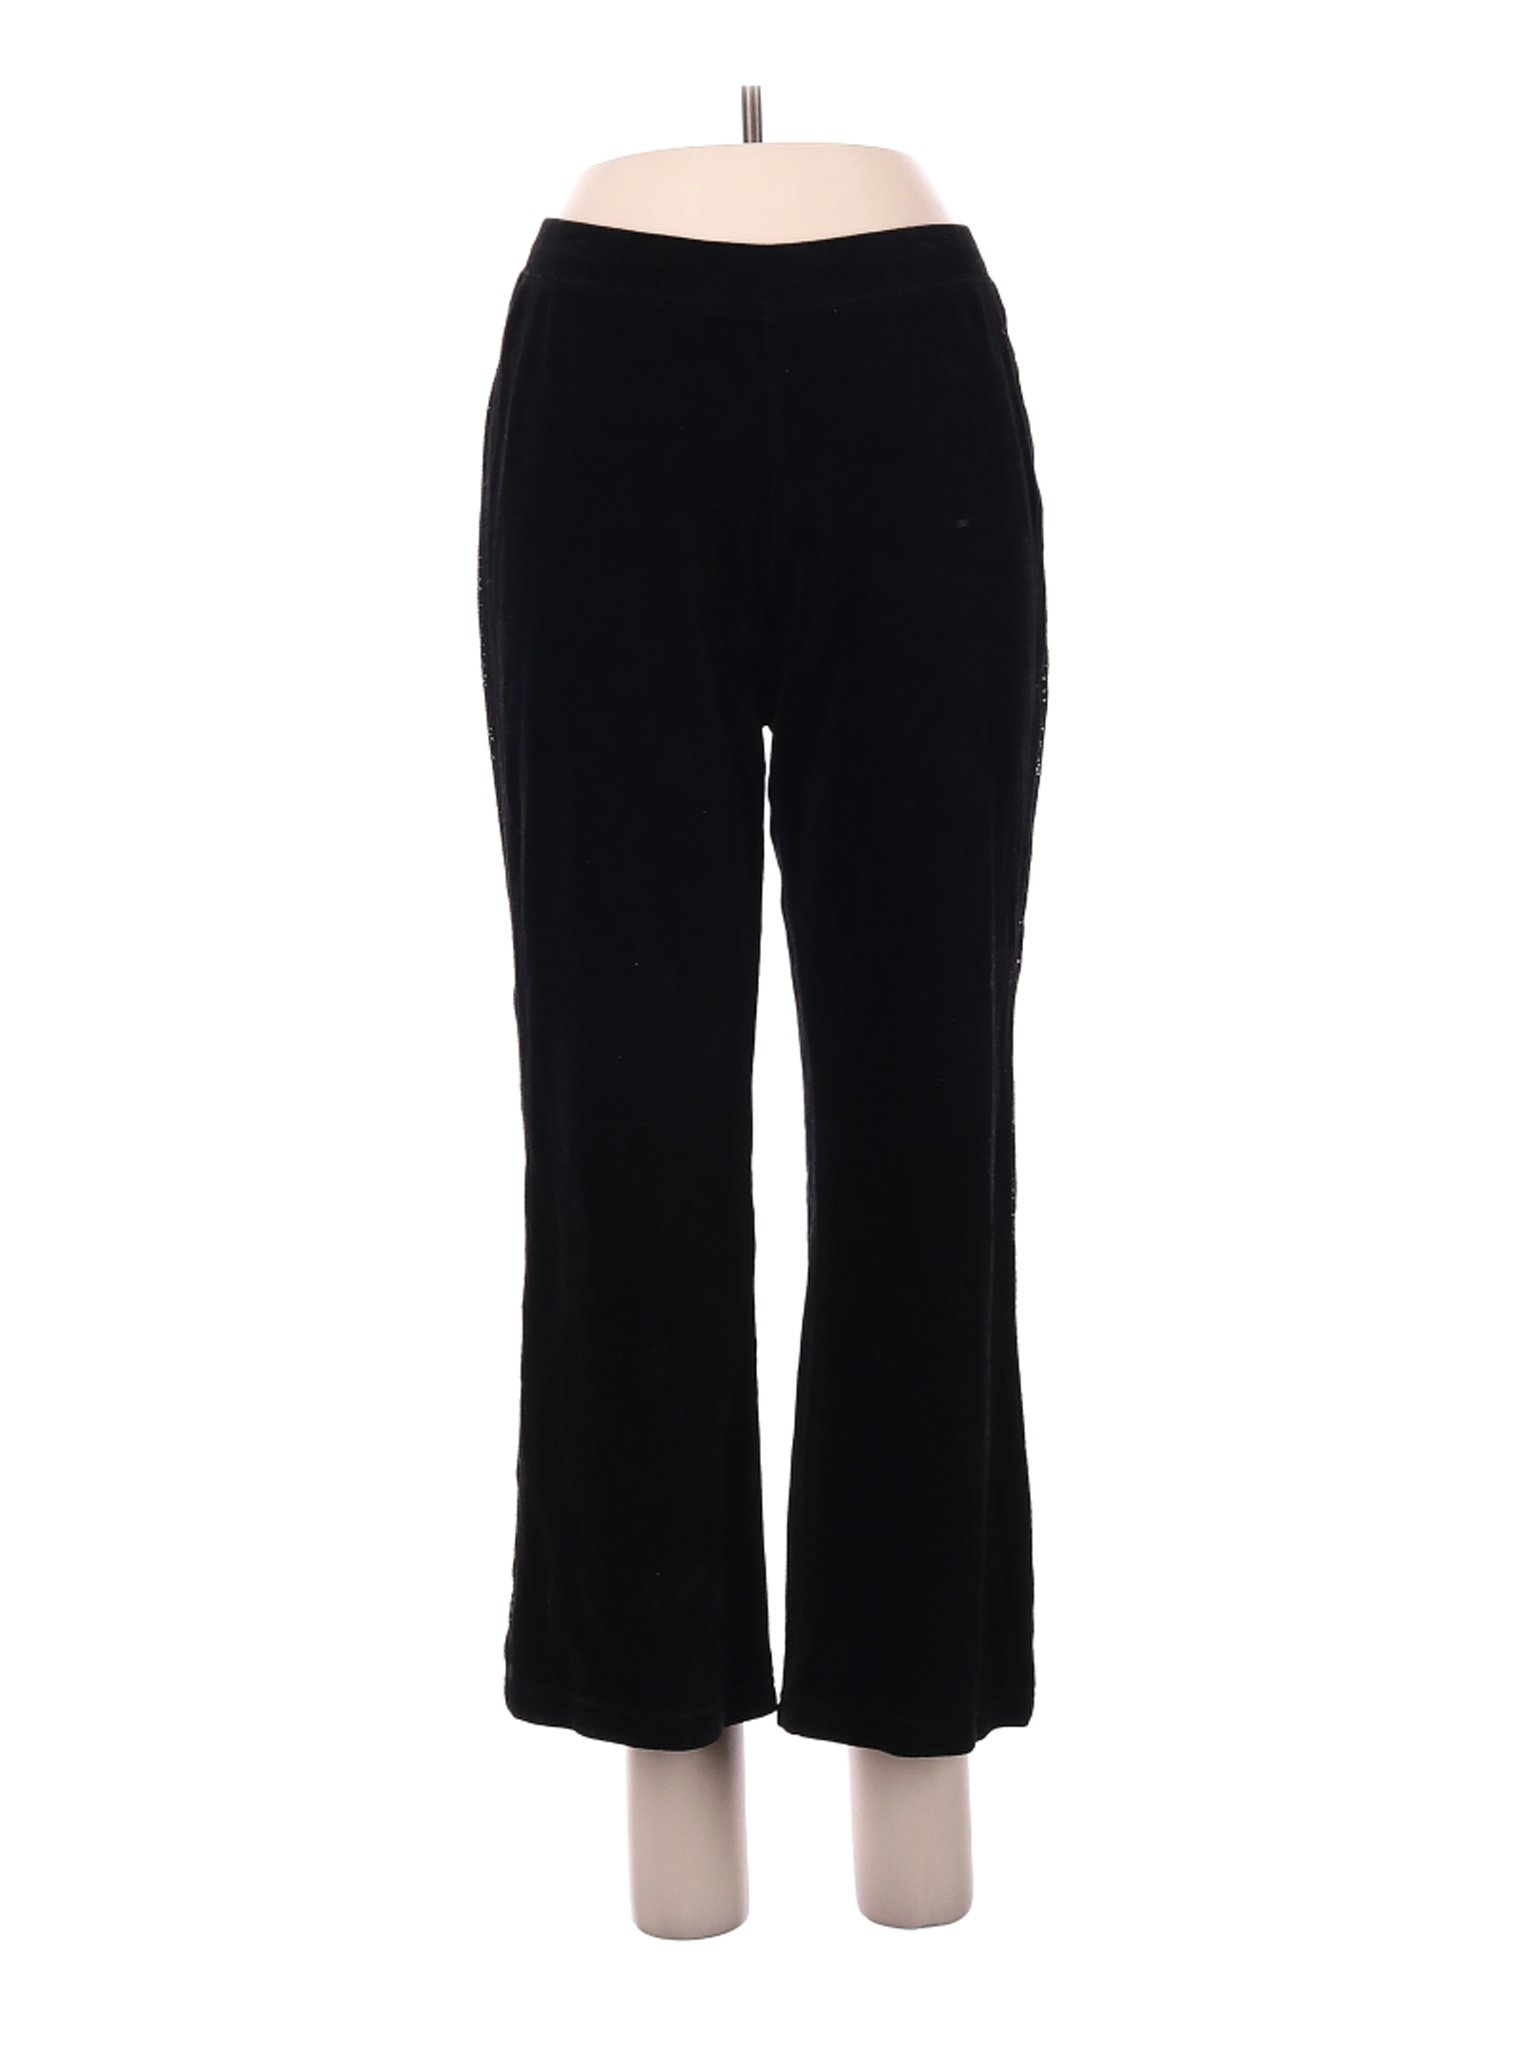 Style&Co Women Black Velour Pants M | eBay